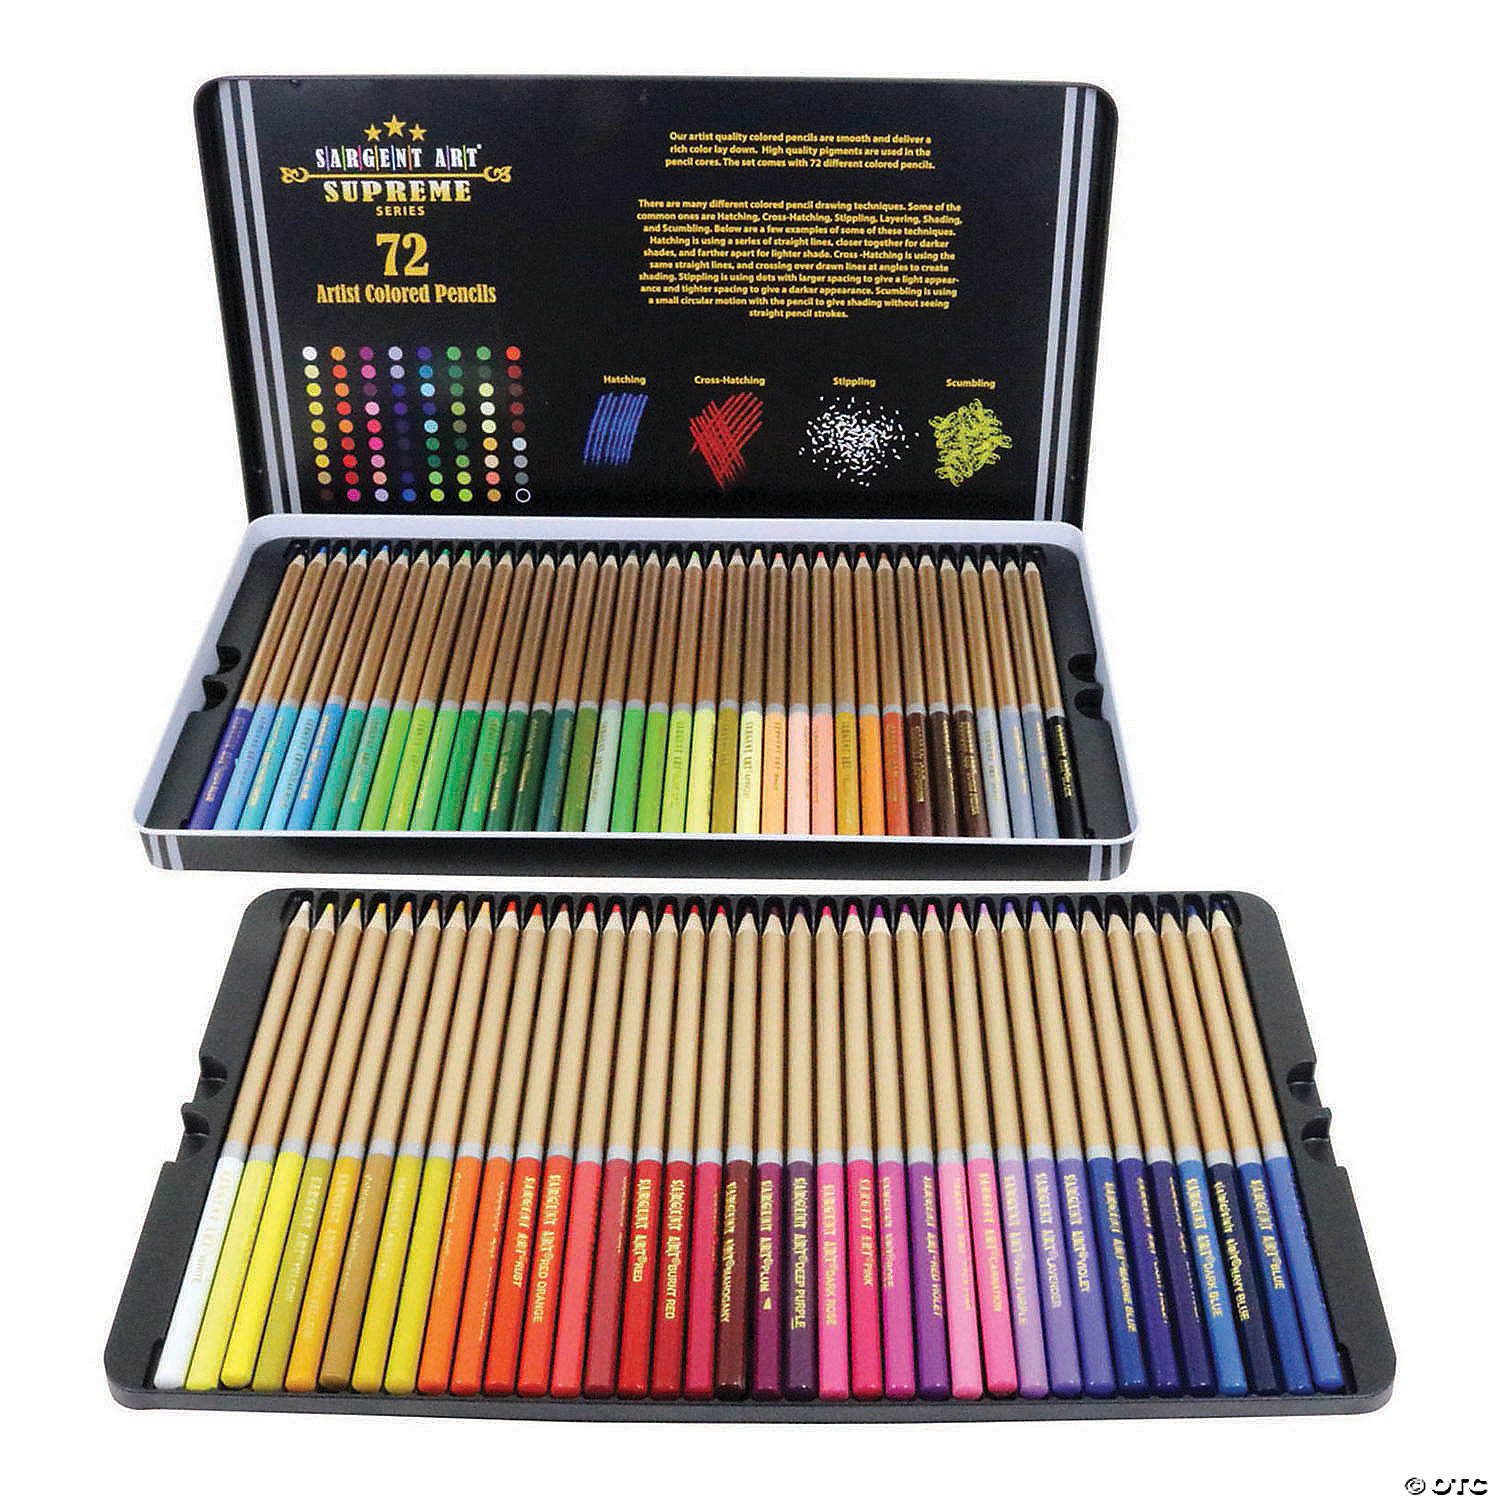 https://s7.orientaltrading.com/is/image/OrientalTrading/VIEWER_ZOOM/72-color-sargent-art-colored-pencils~13909709